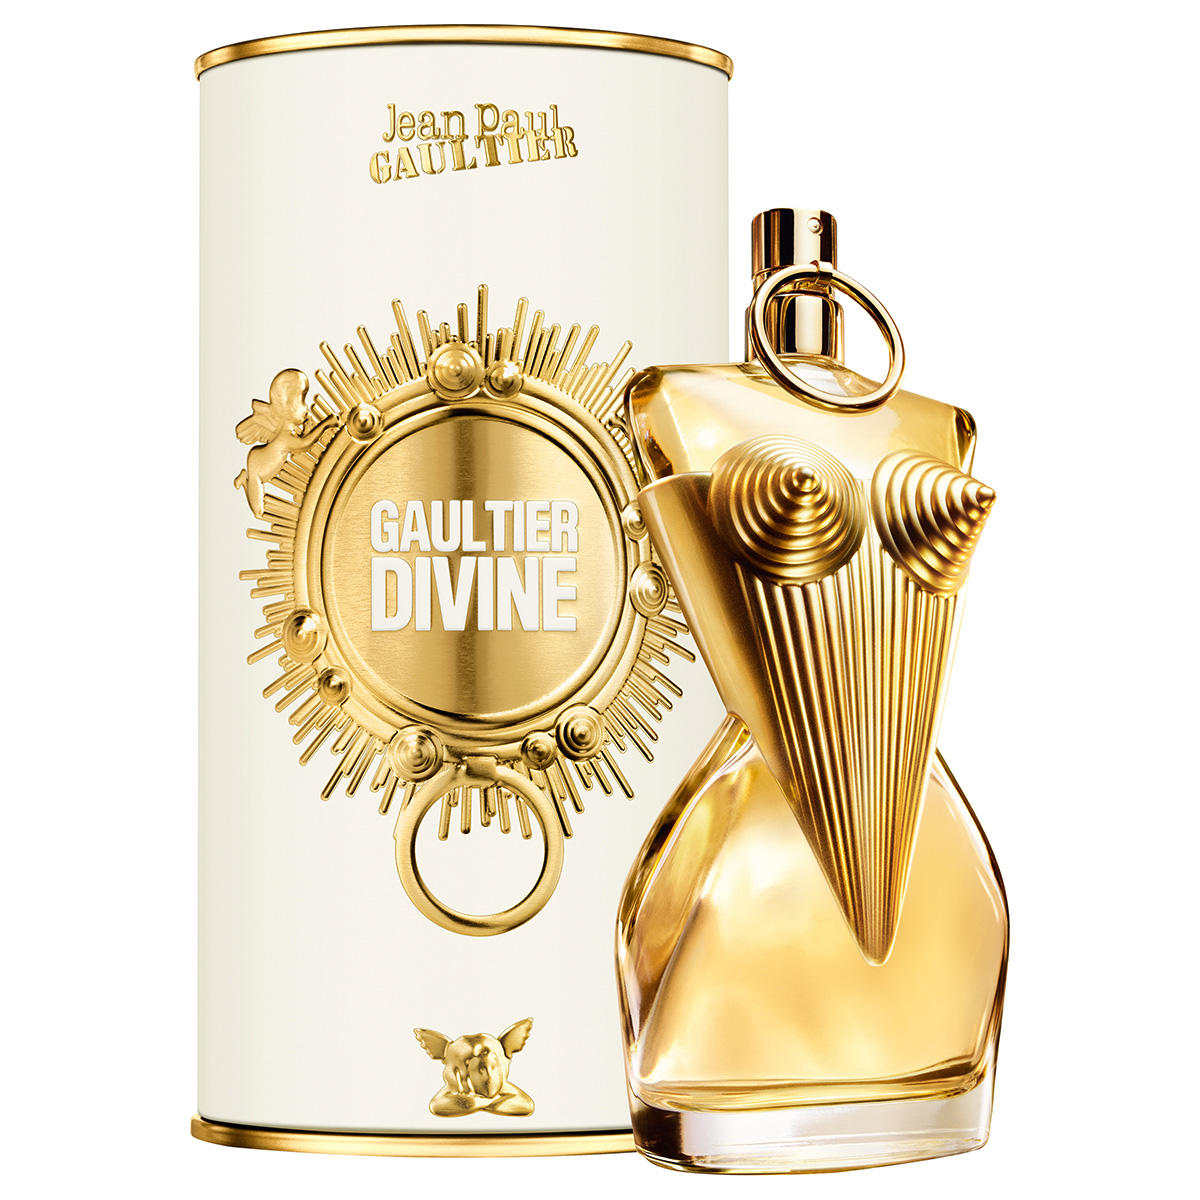 Jean Paul Gaultier Gaultier Divine Eau de Parfum 100 ml - Refillable - 2